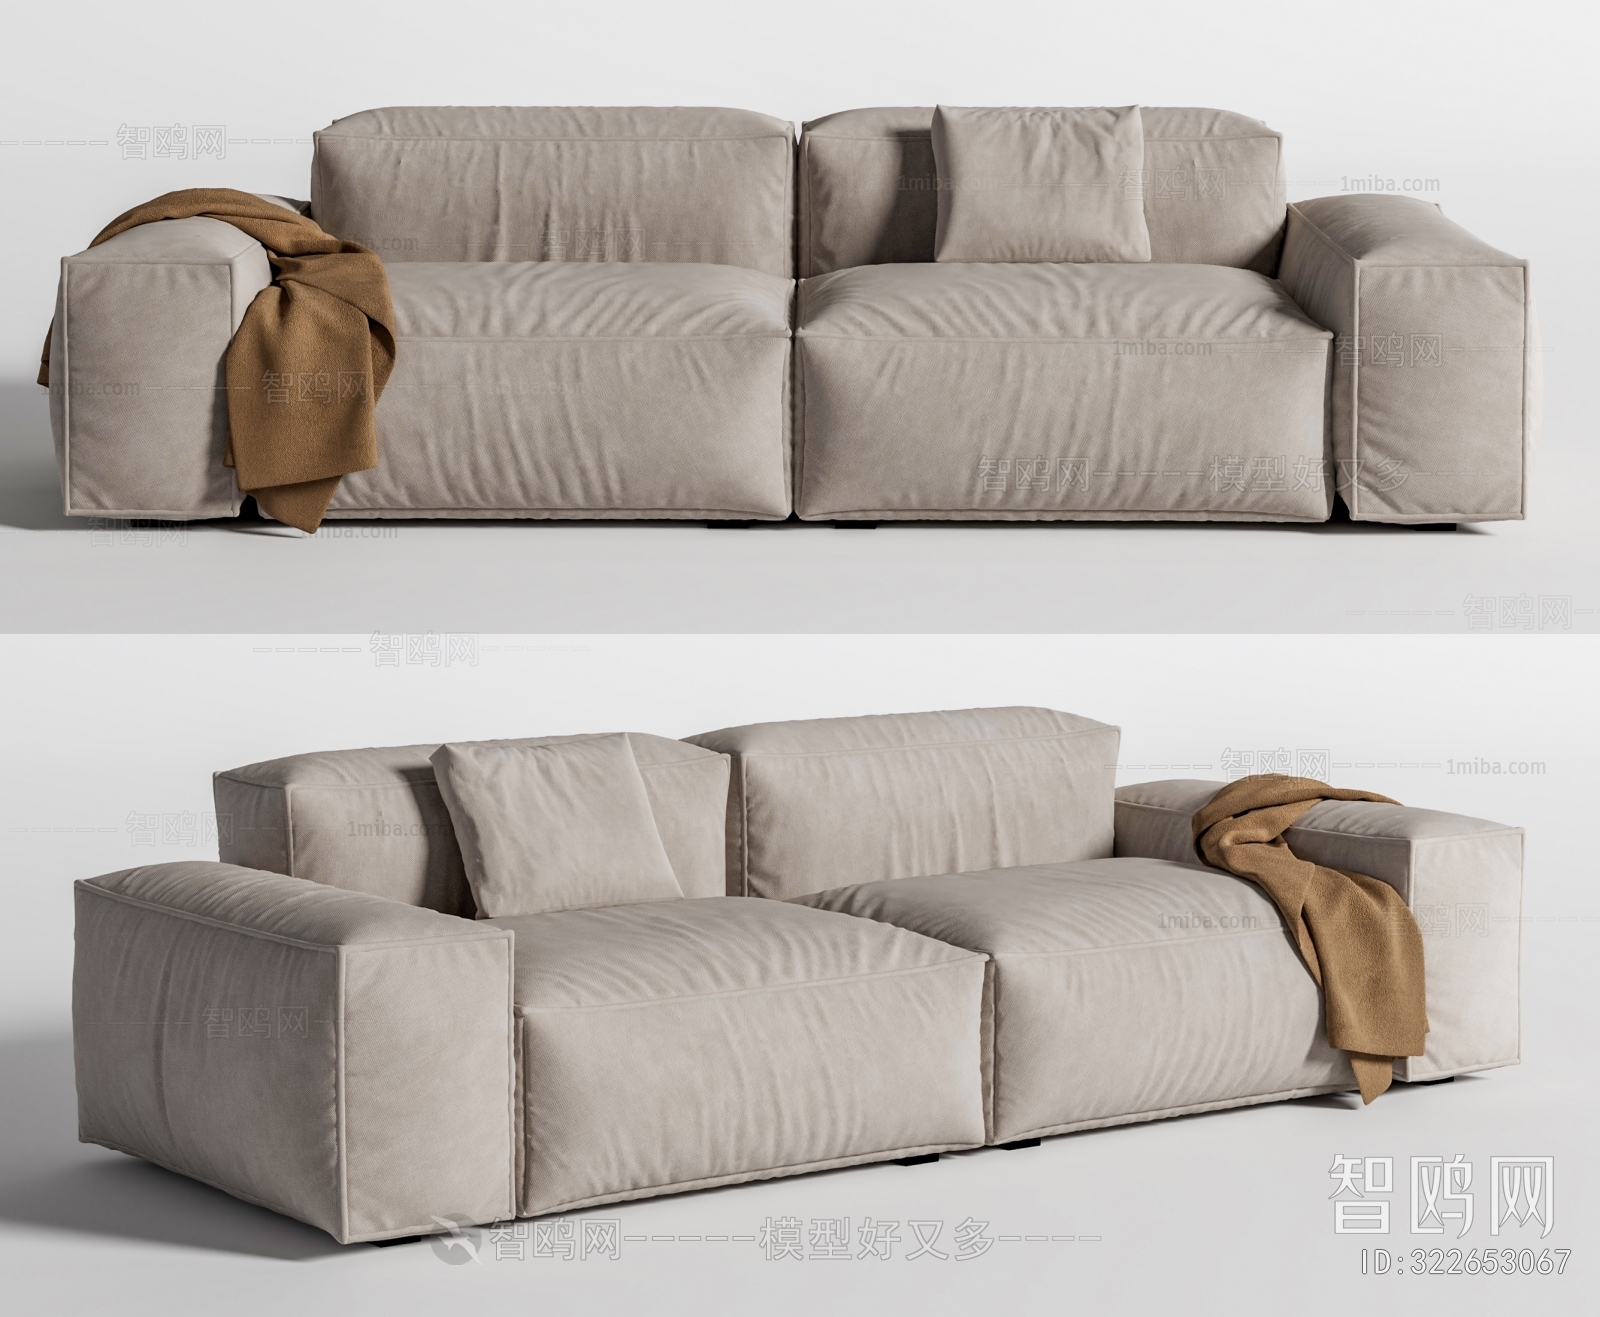 Cubotto 现代双人沙发